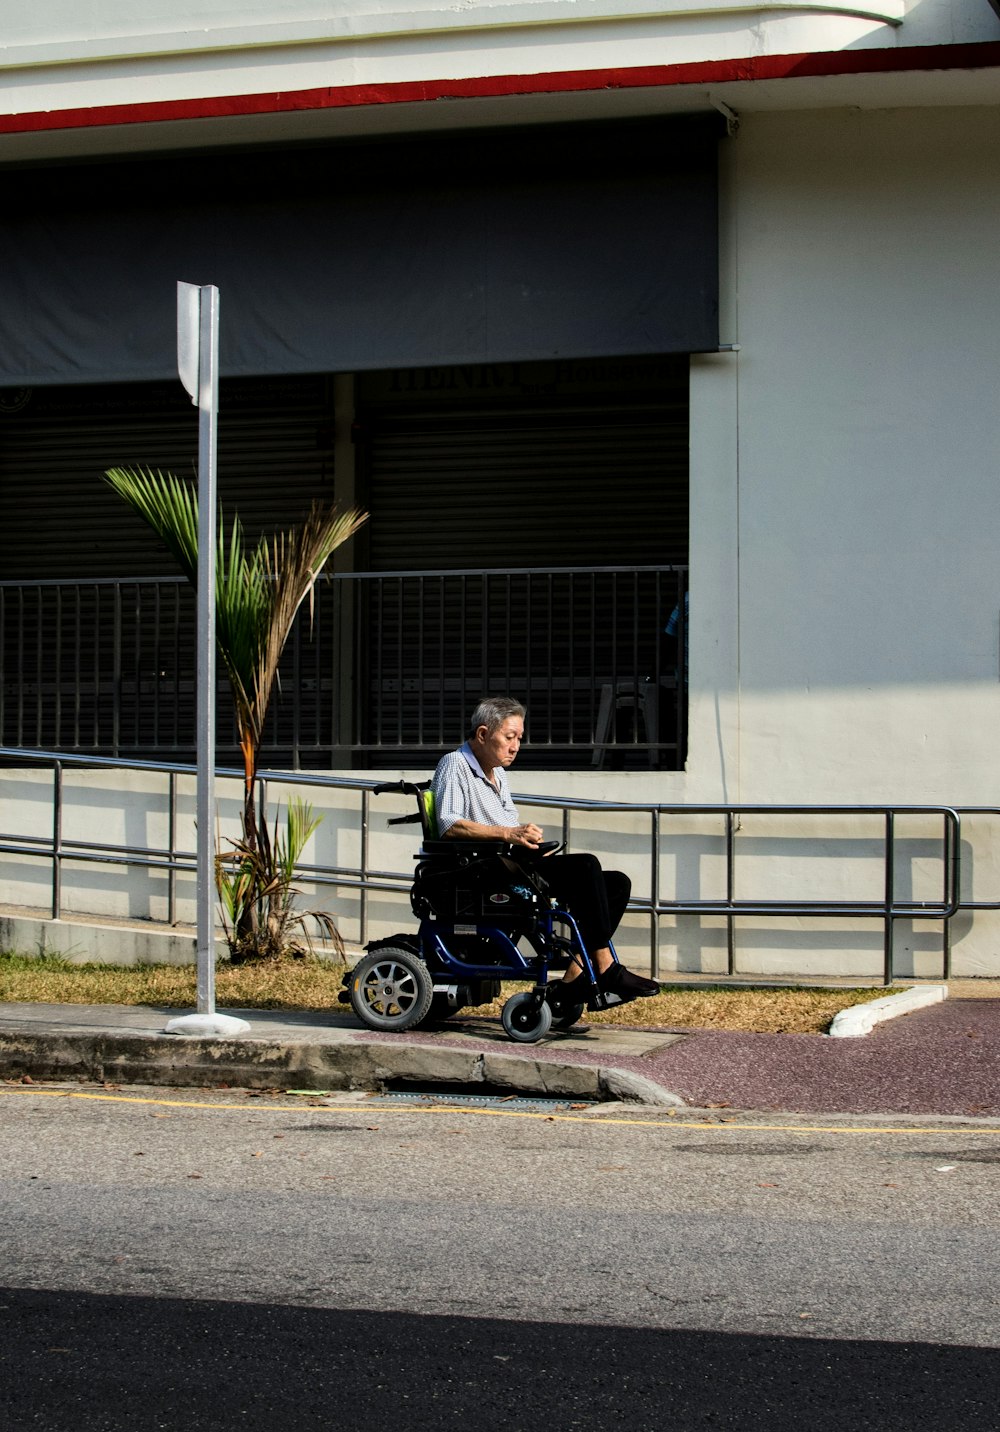 man riding wheelchair at roadside during daytime